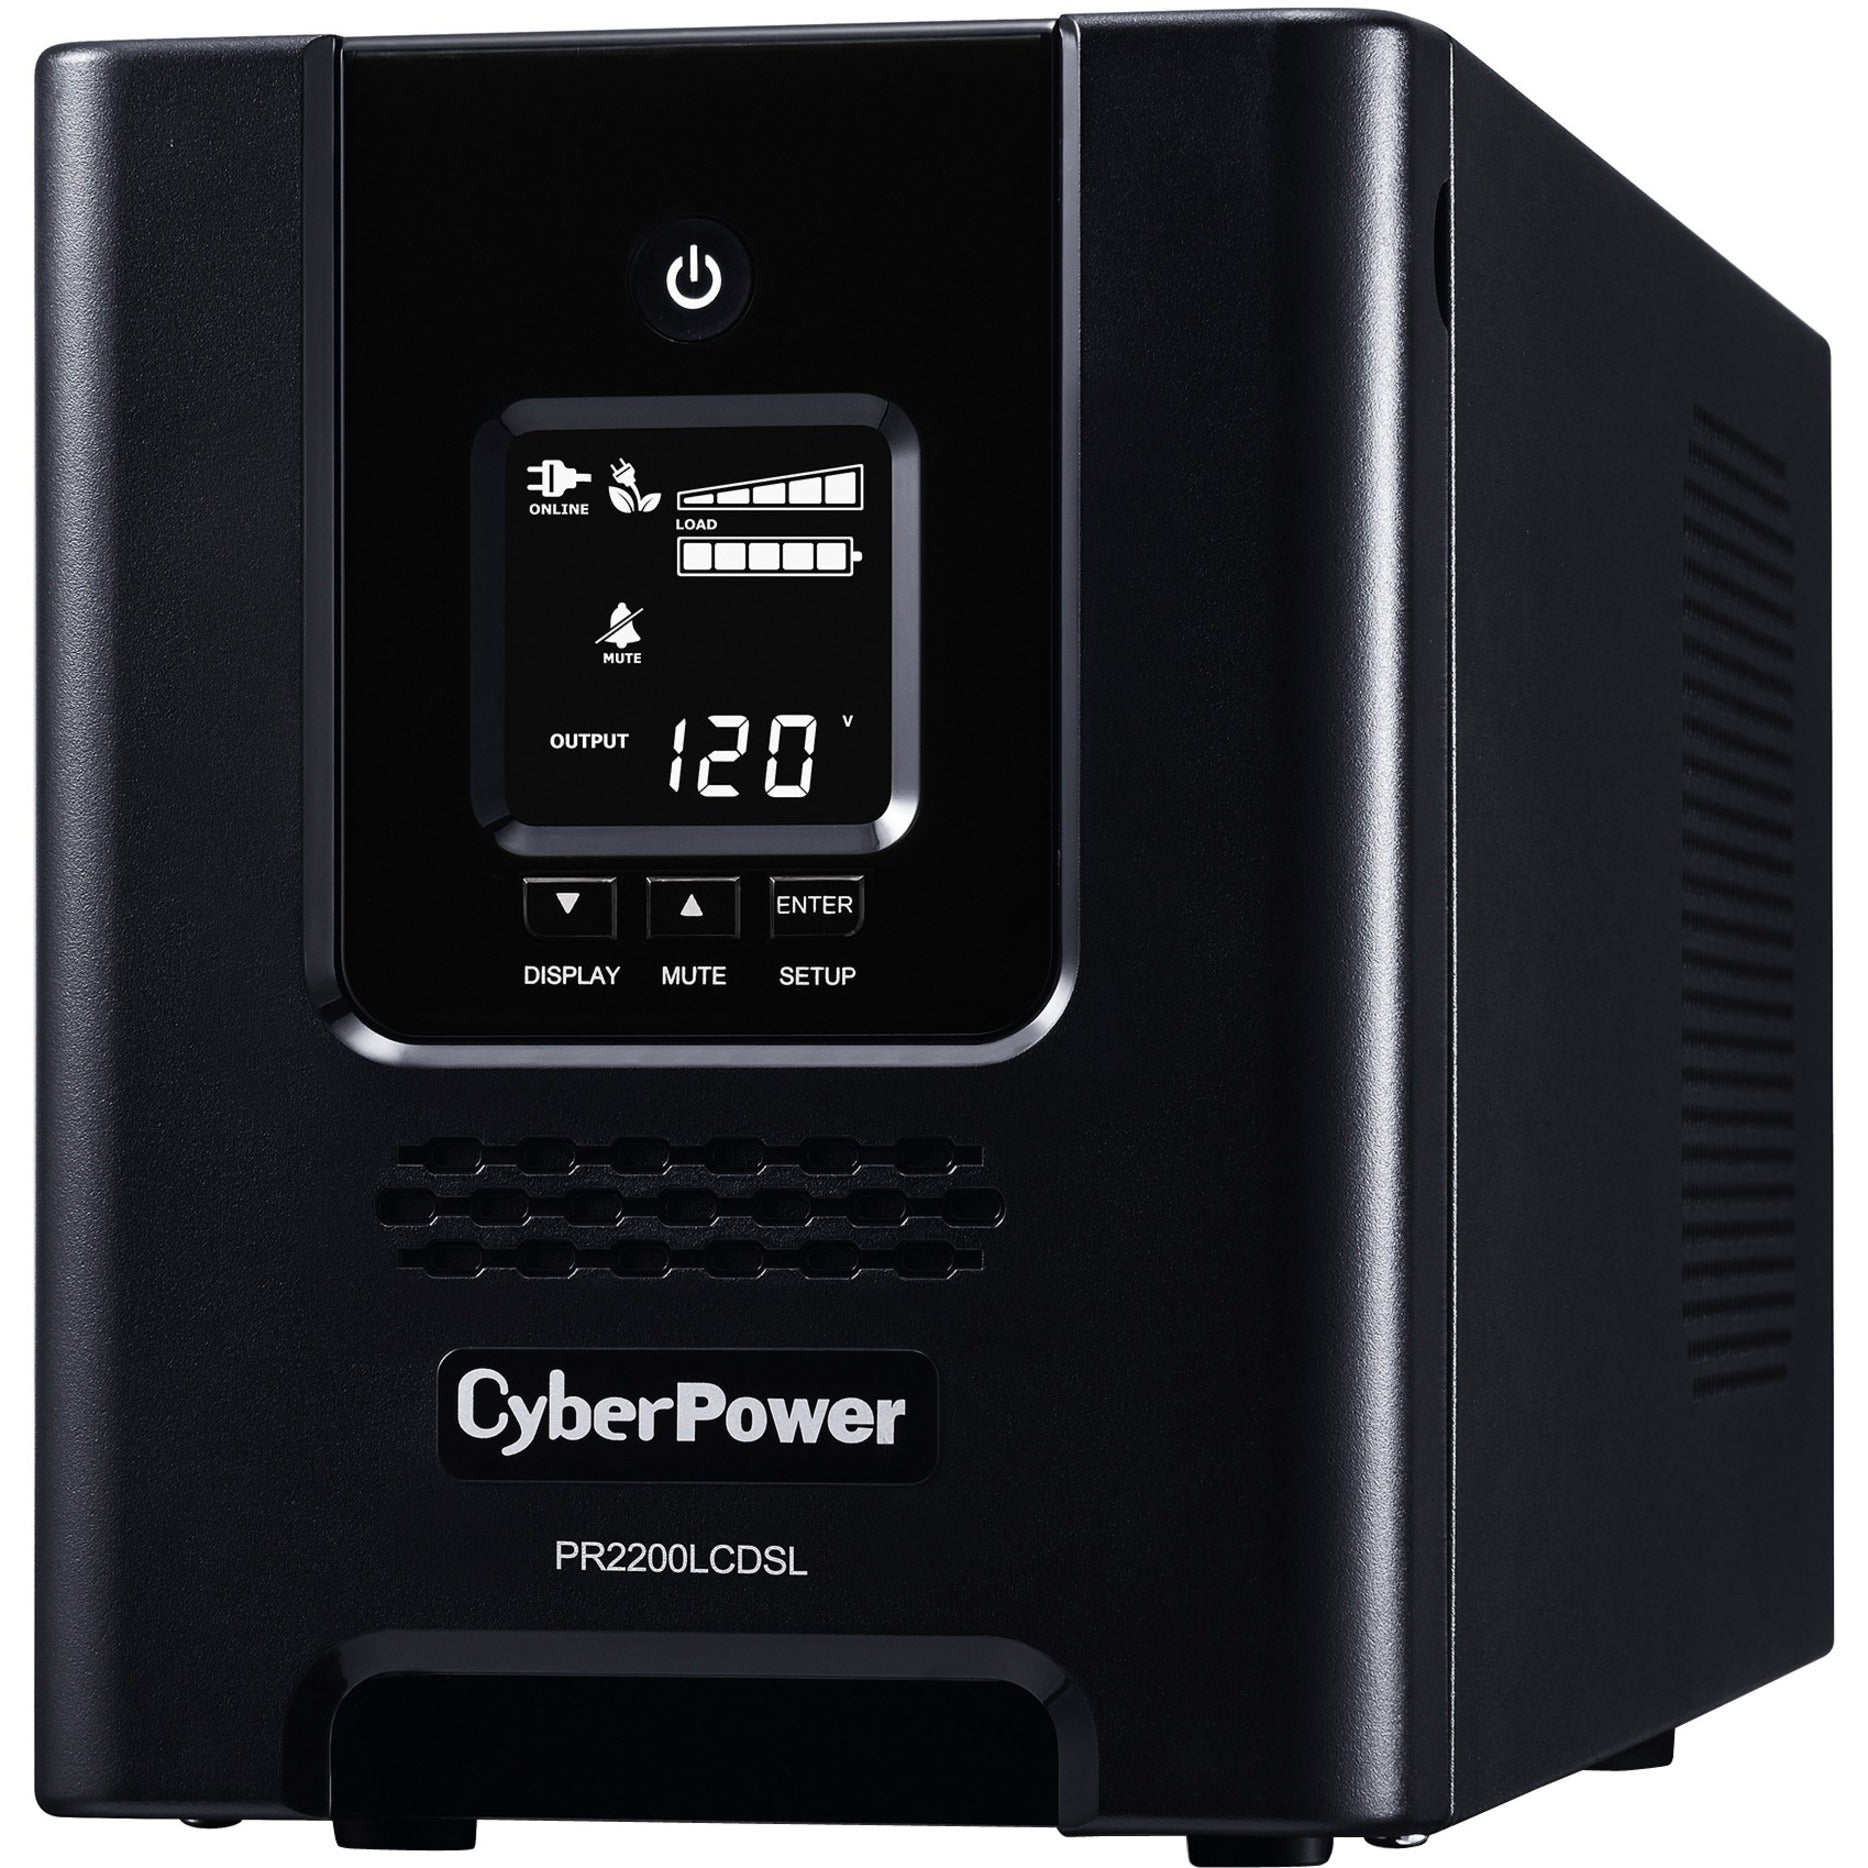 CyberPower PR2200LCDSL Smart App Sinewave UPS Systems, 2070VA Pure Sine Wave Tower LCD UPS